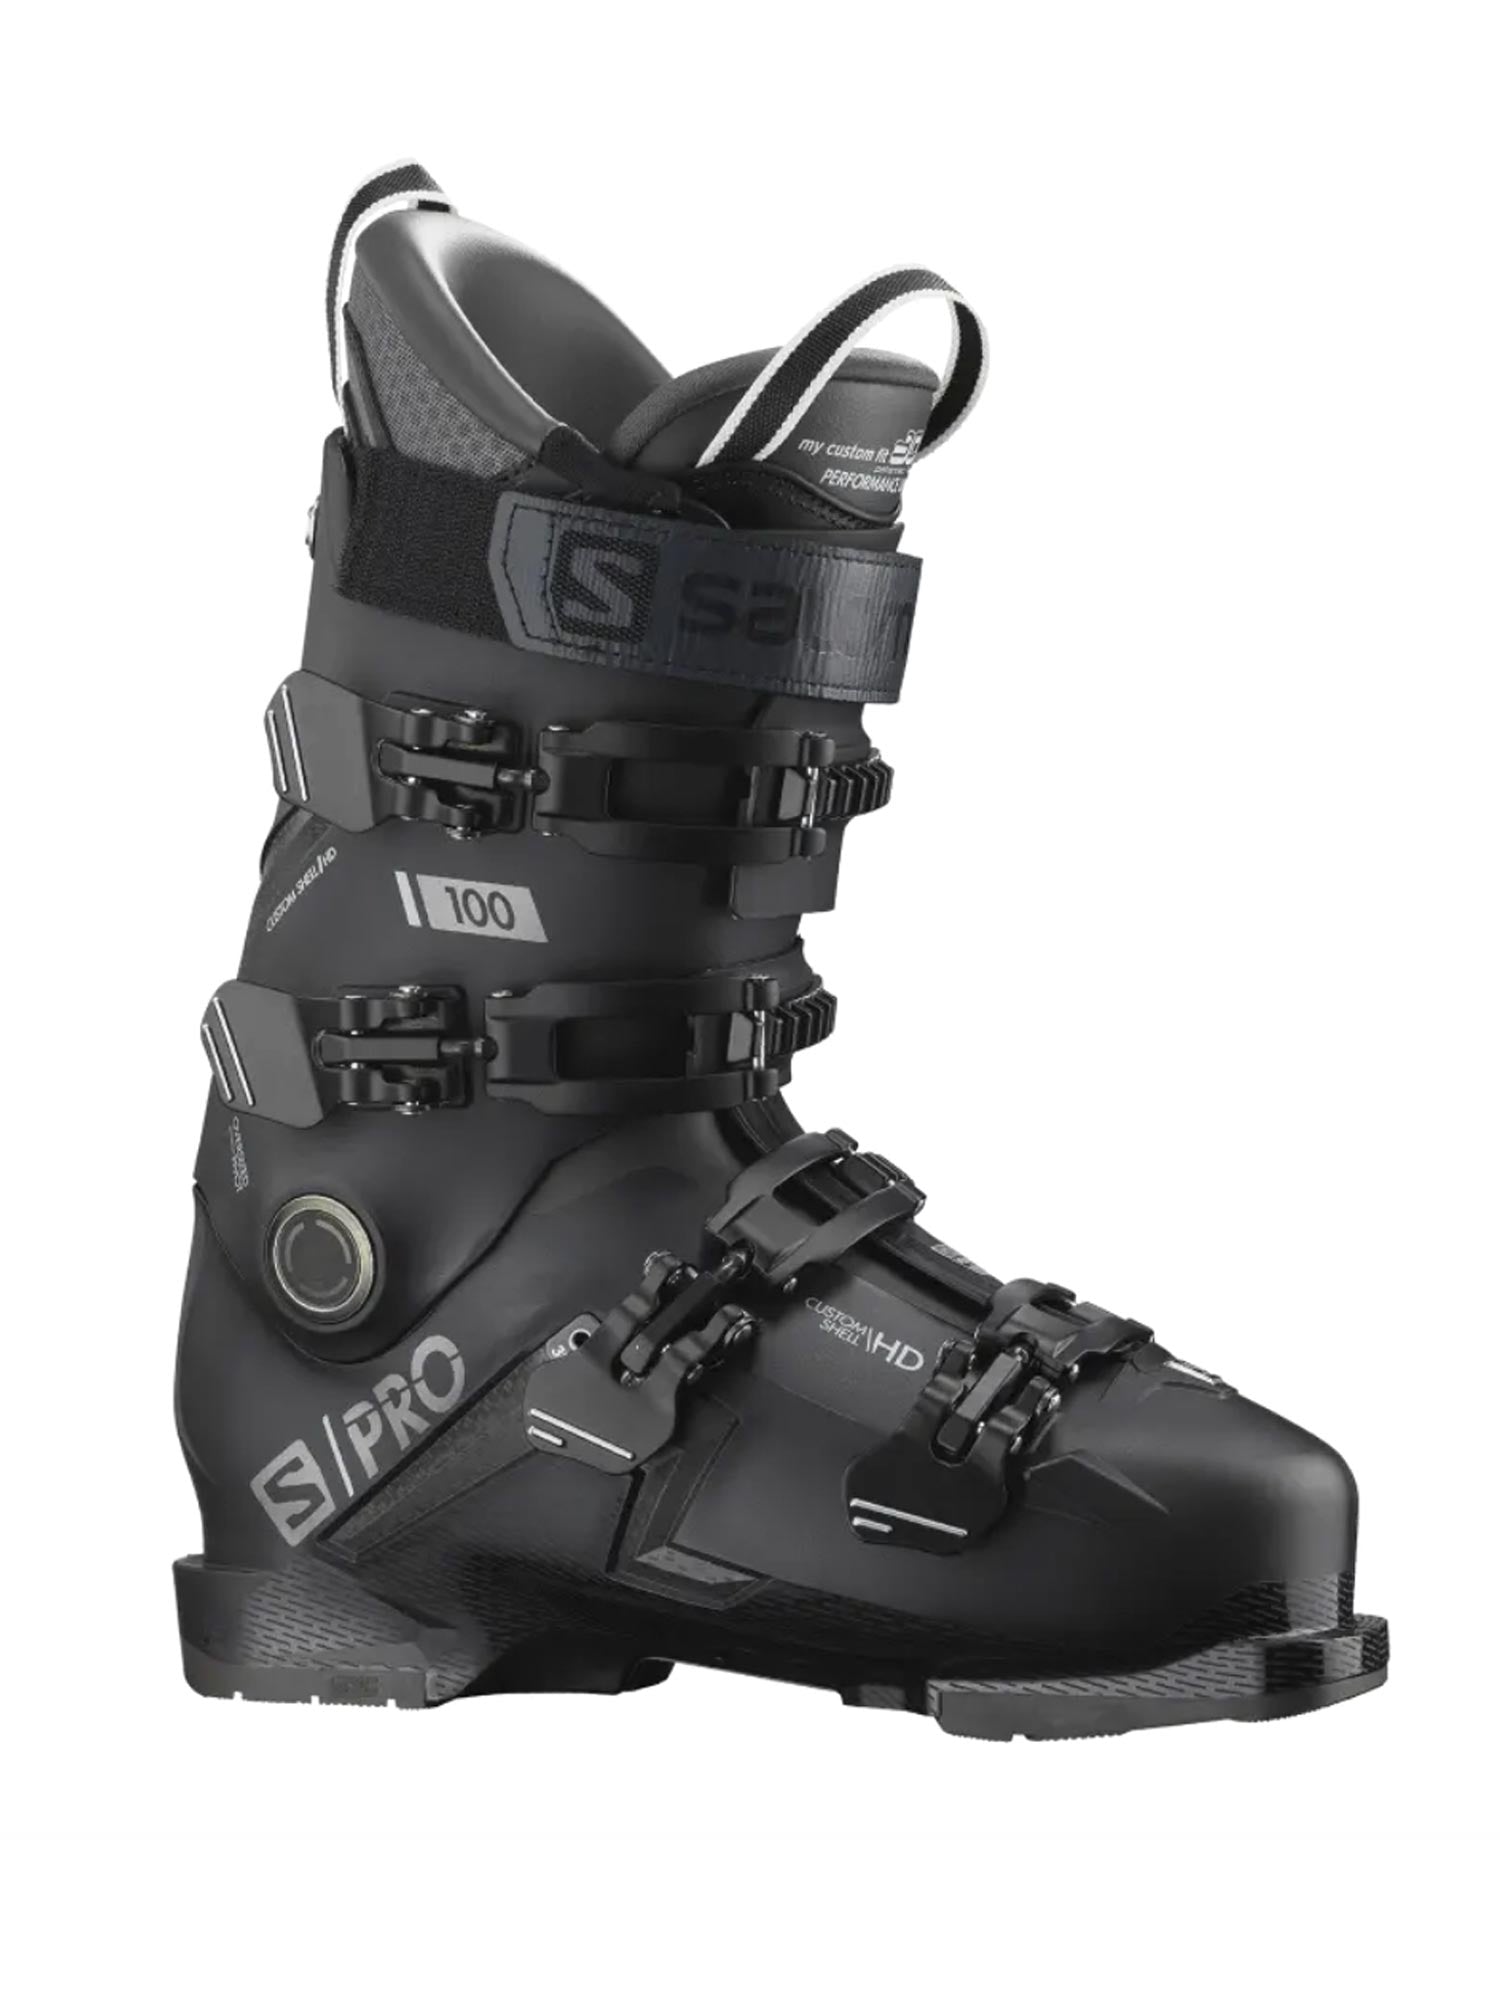 men's Salomon SPro 100 ski boots, black